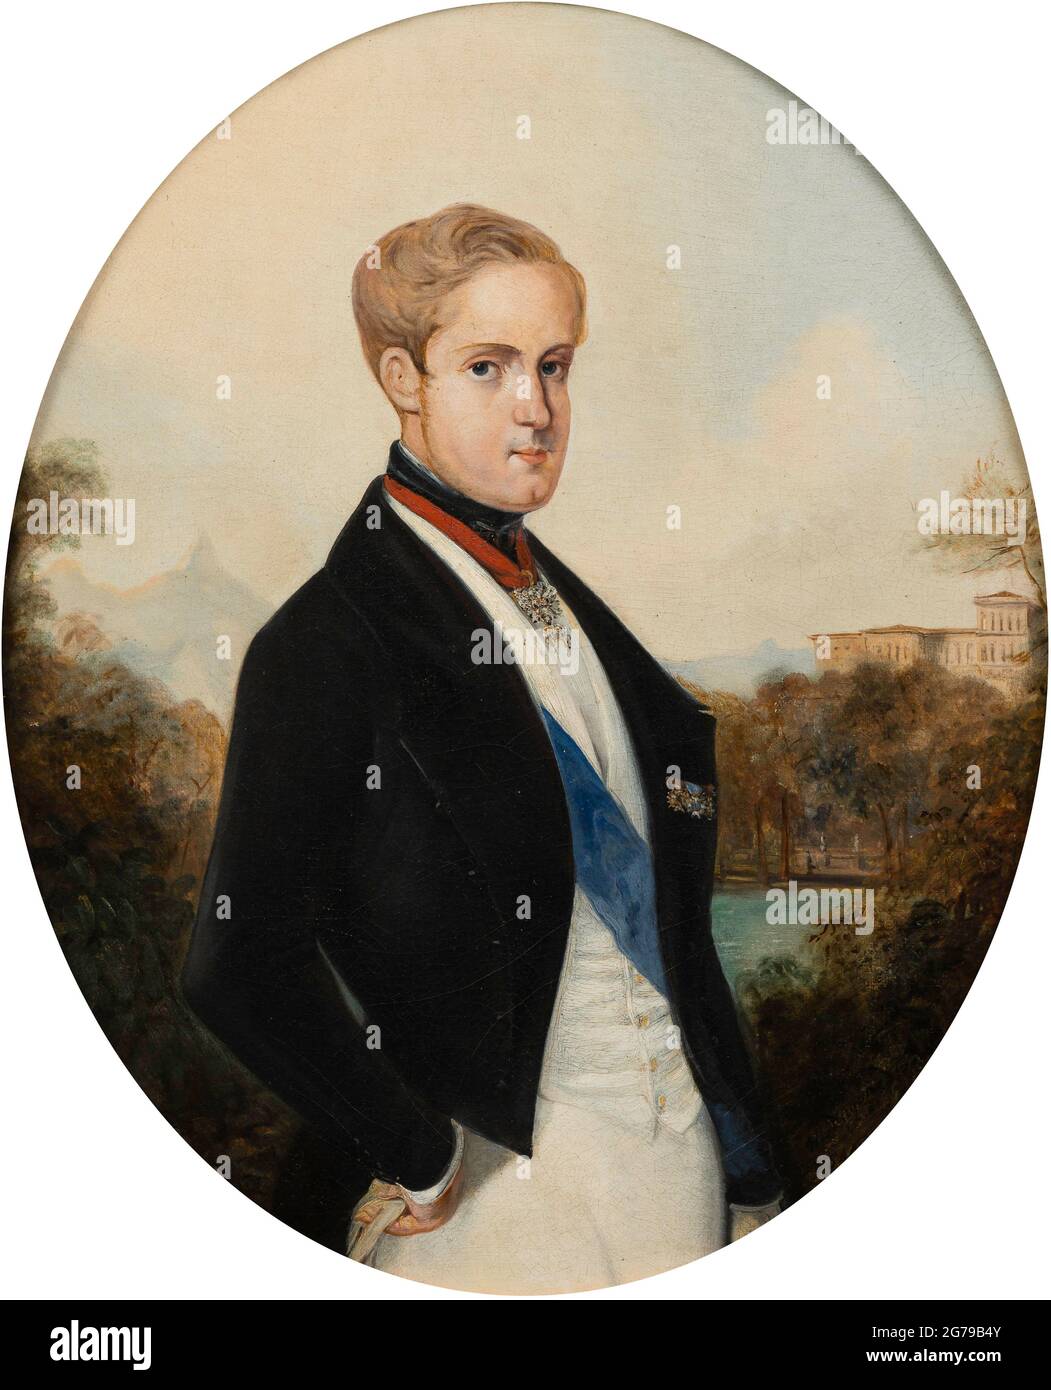 Portrait of Emperor Peter II of Brazil (1825-1891). Museum: Instituto Cultural Itaú. Author: JOHANN MORITZ RUGENDAS. Stock Photo